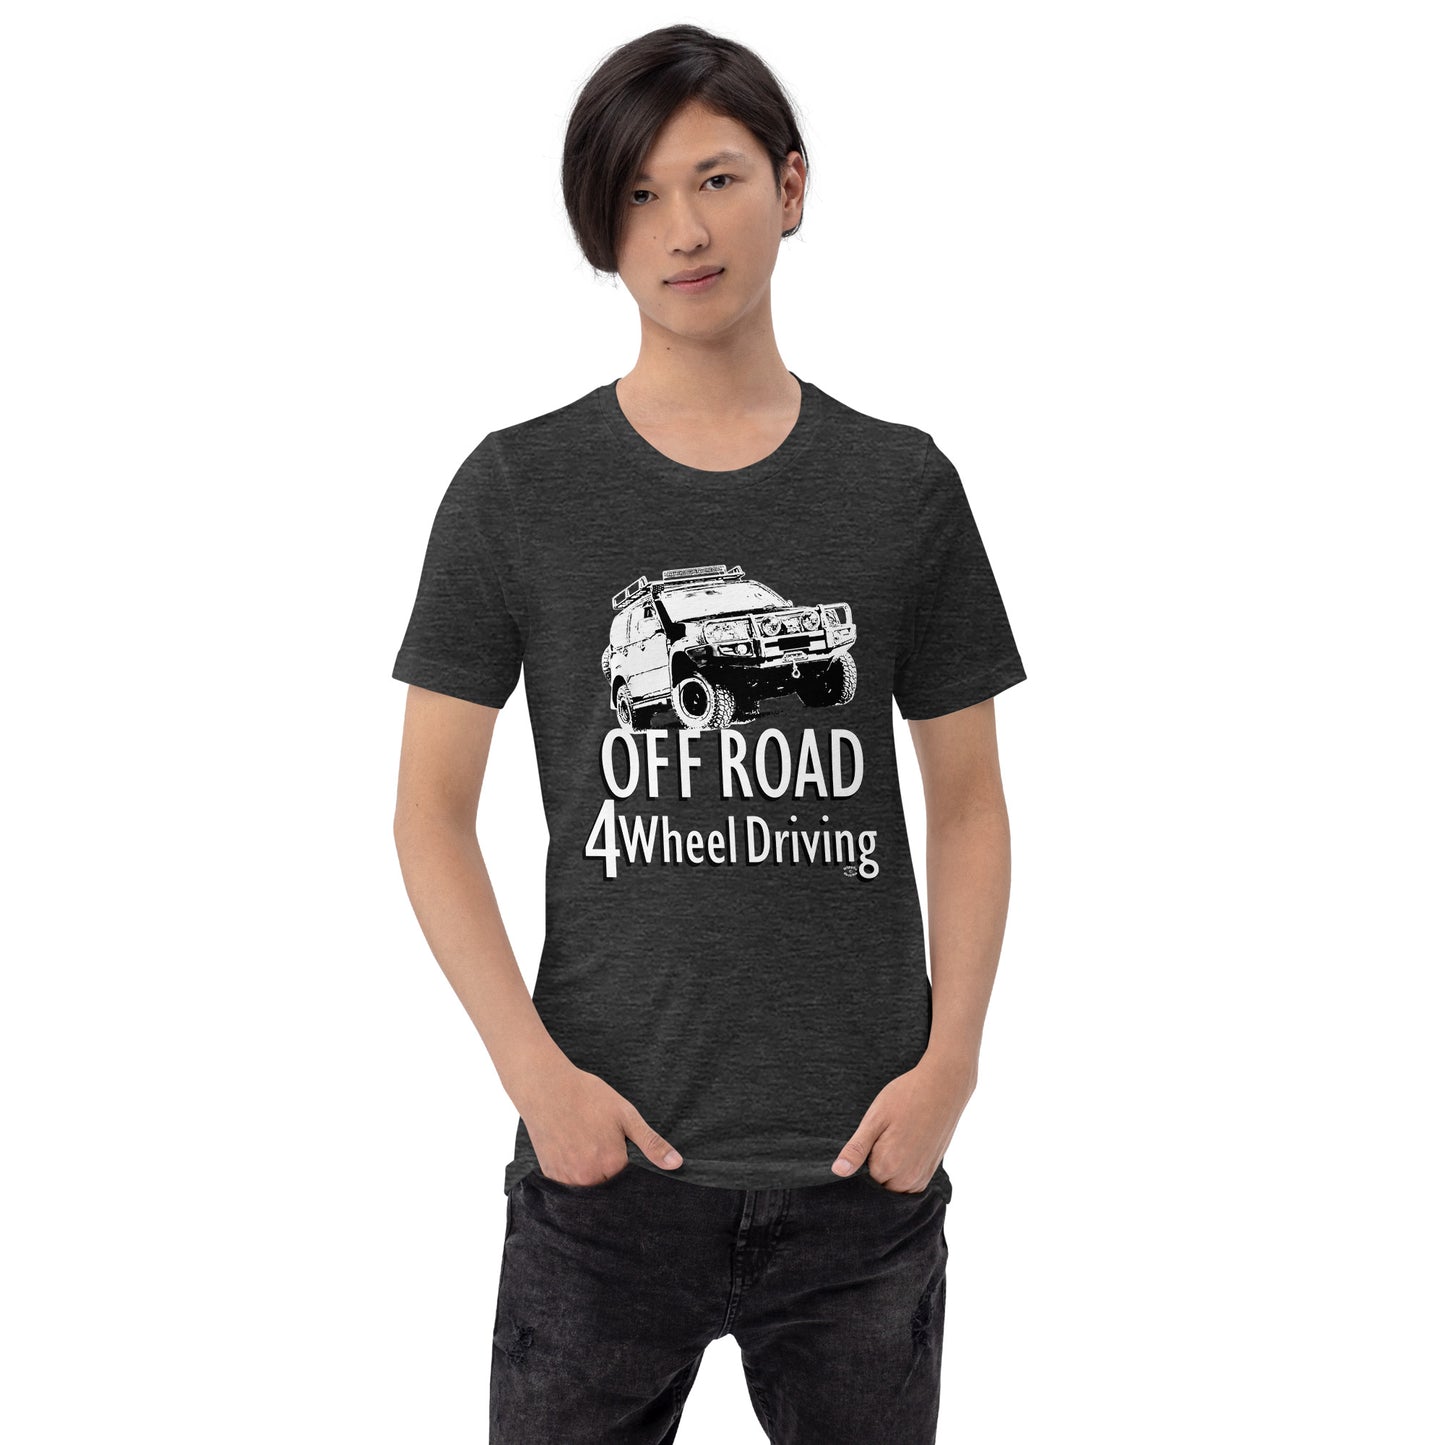 "Off Road 4 Wheel Driving" Unisex T-Shirt